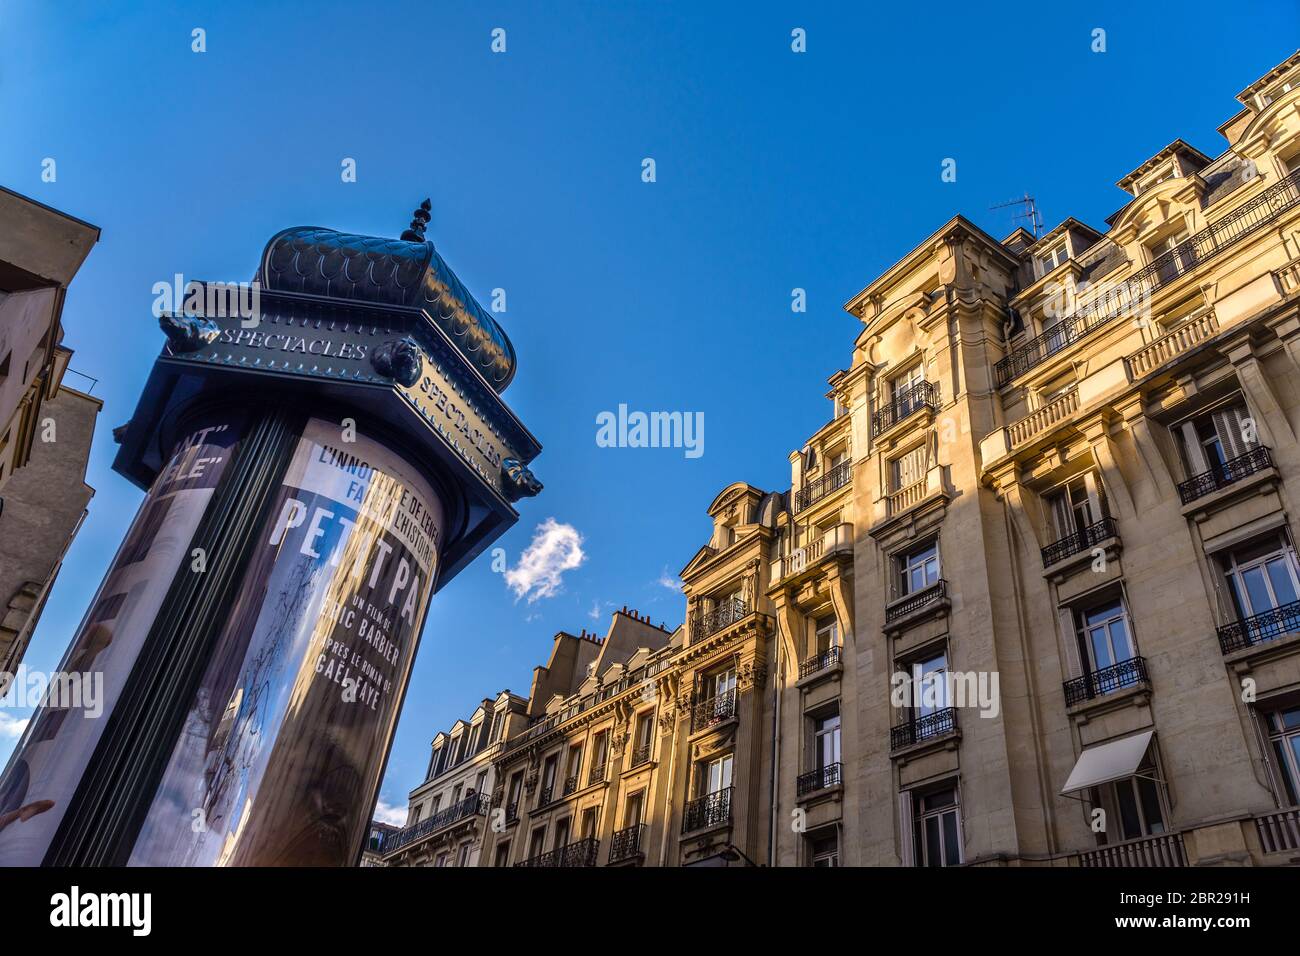 Parisian skyline with advertising column - Paris, France. Stock Photo